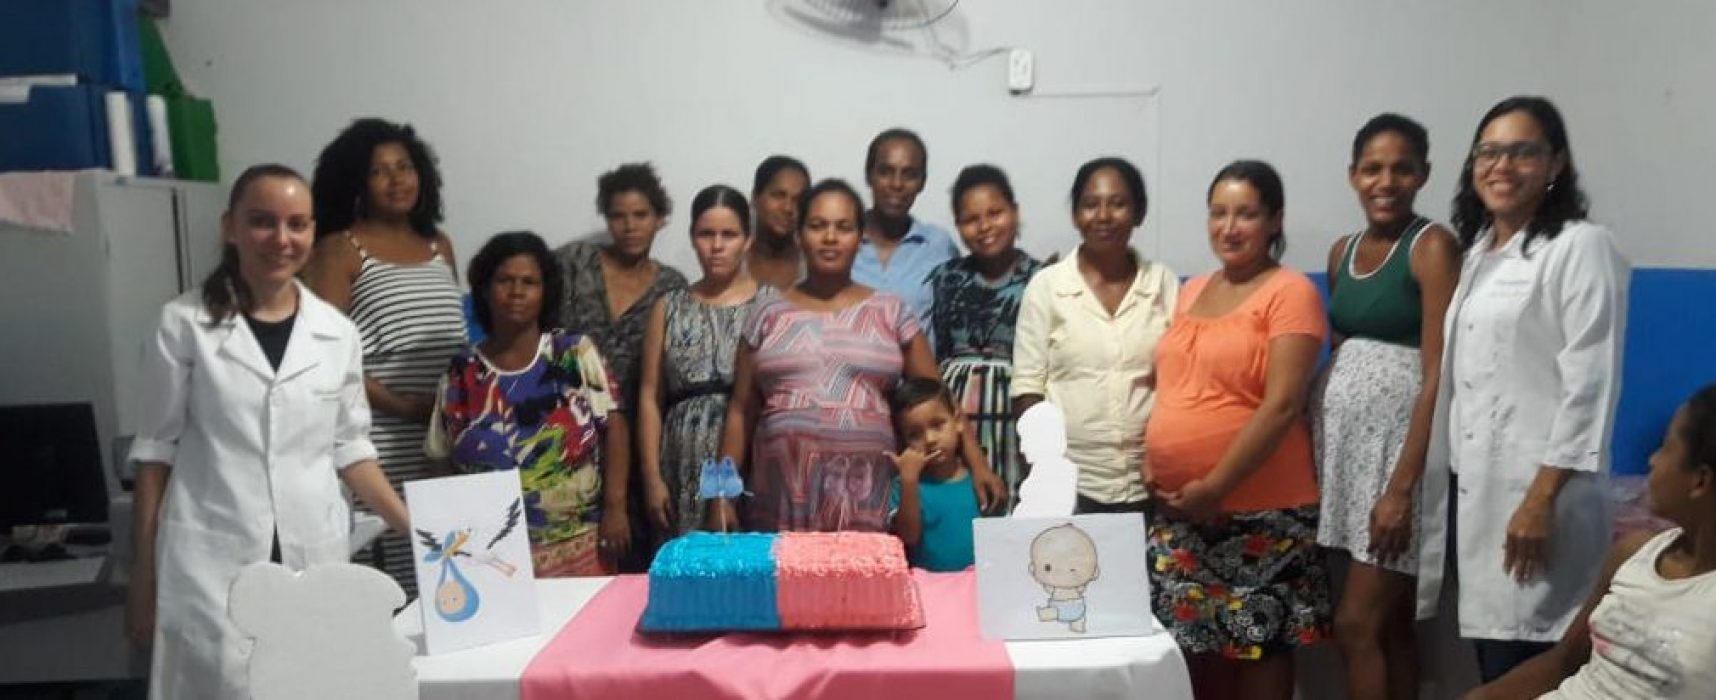 Prefeitura de Una entrega kit maternidade para gestantes atendidas pelos programas sociais